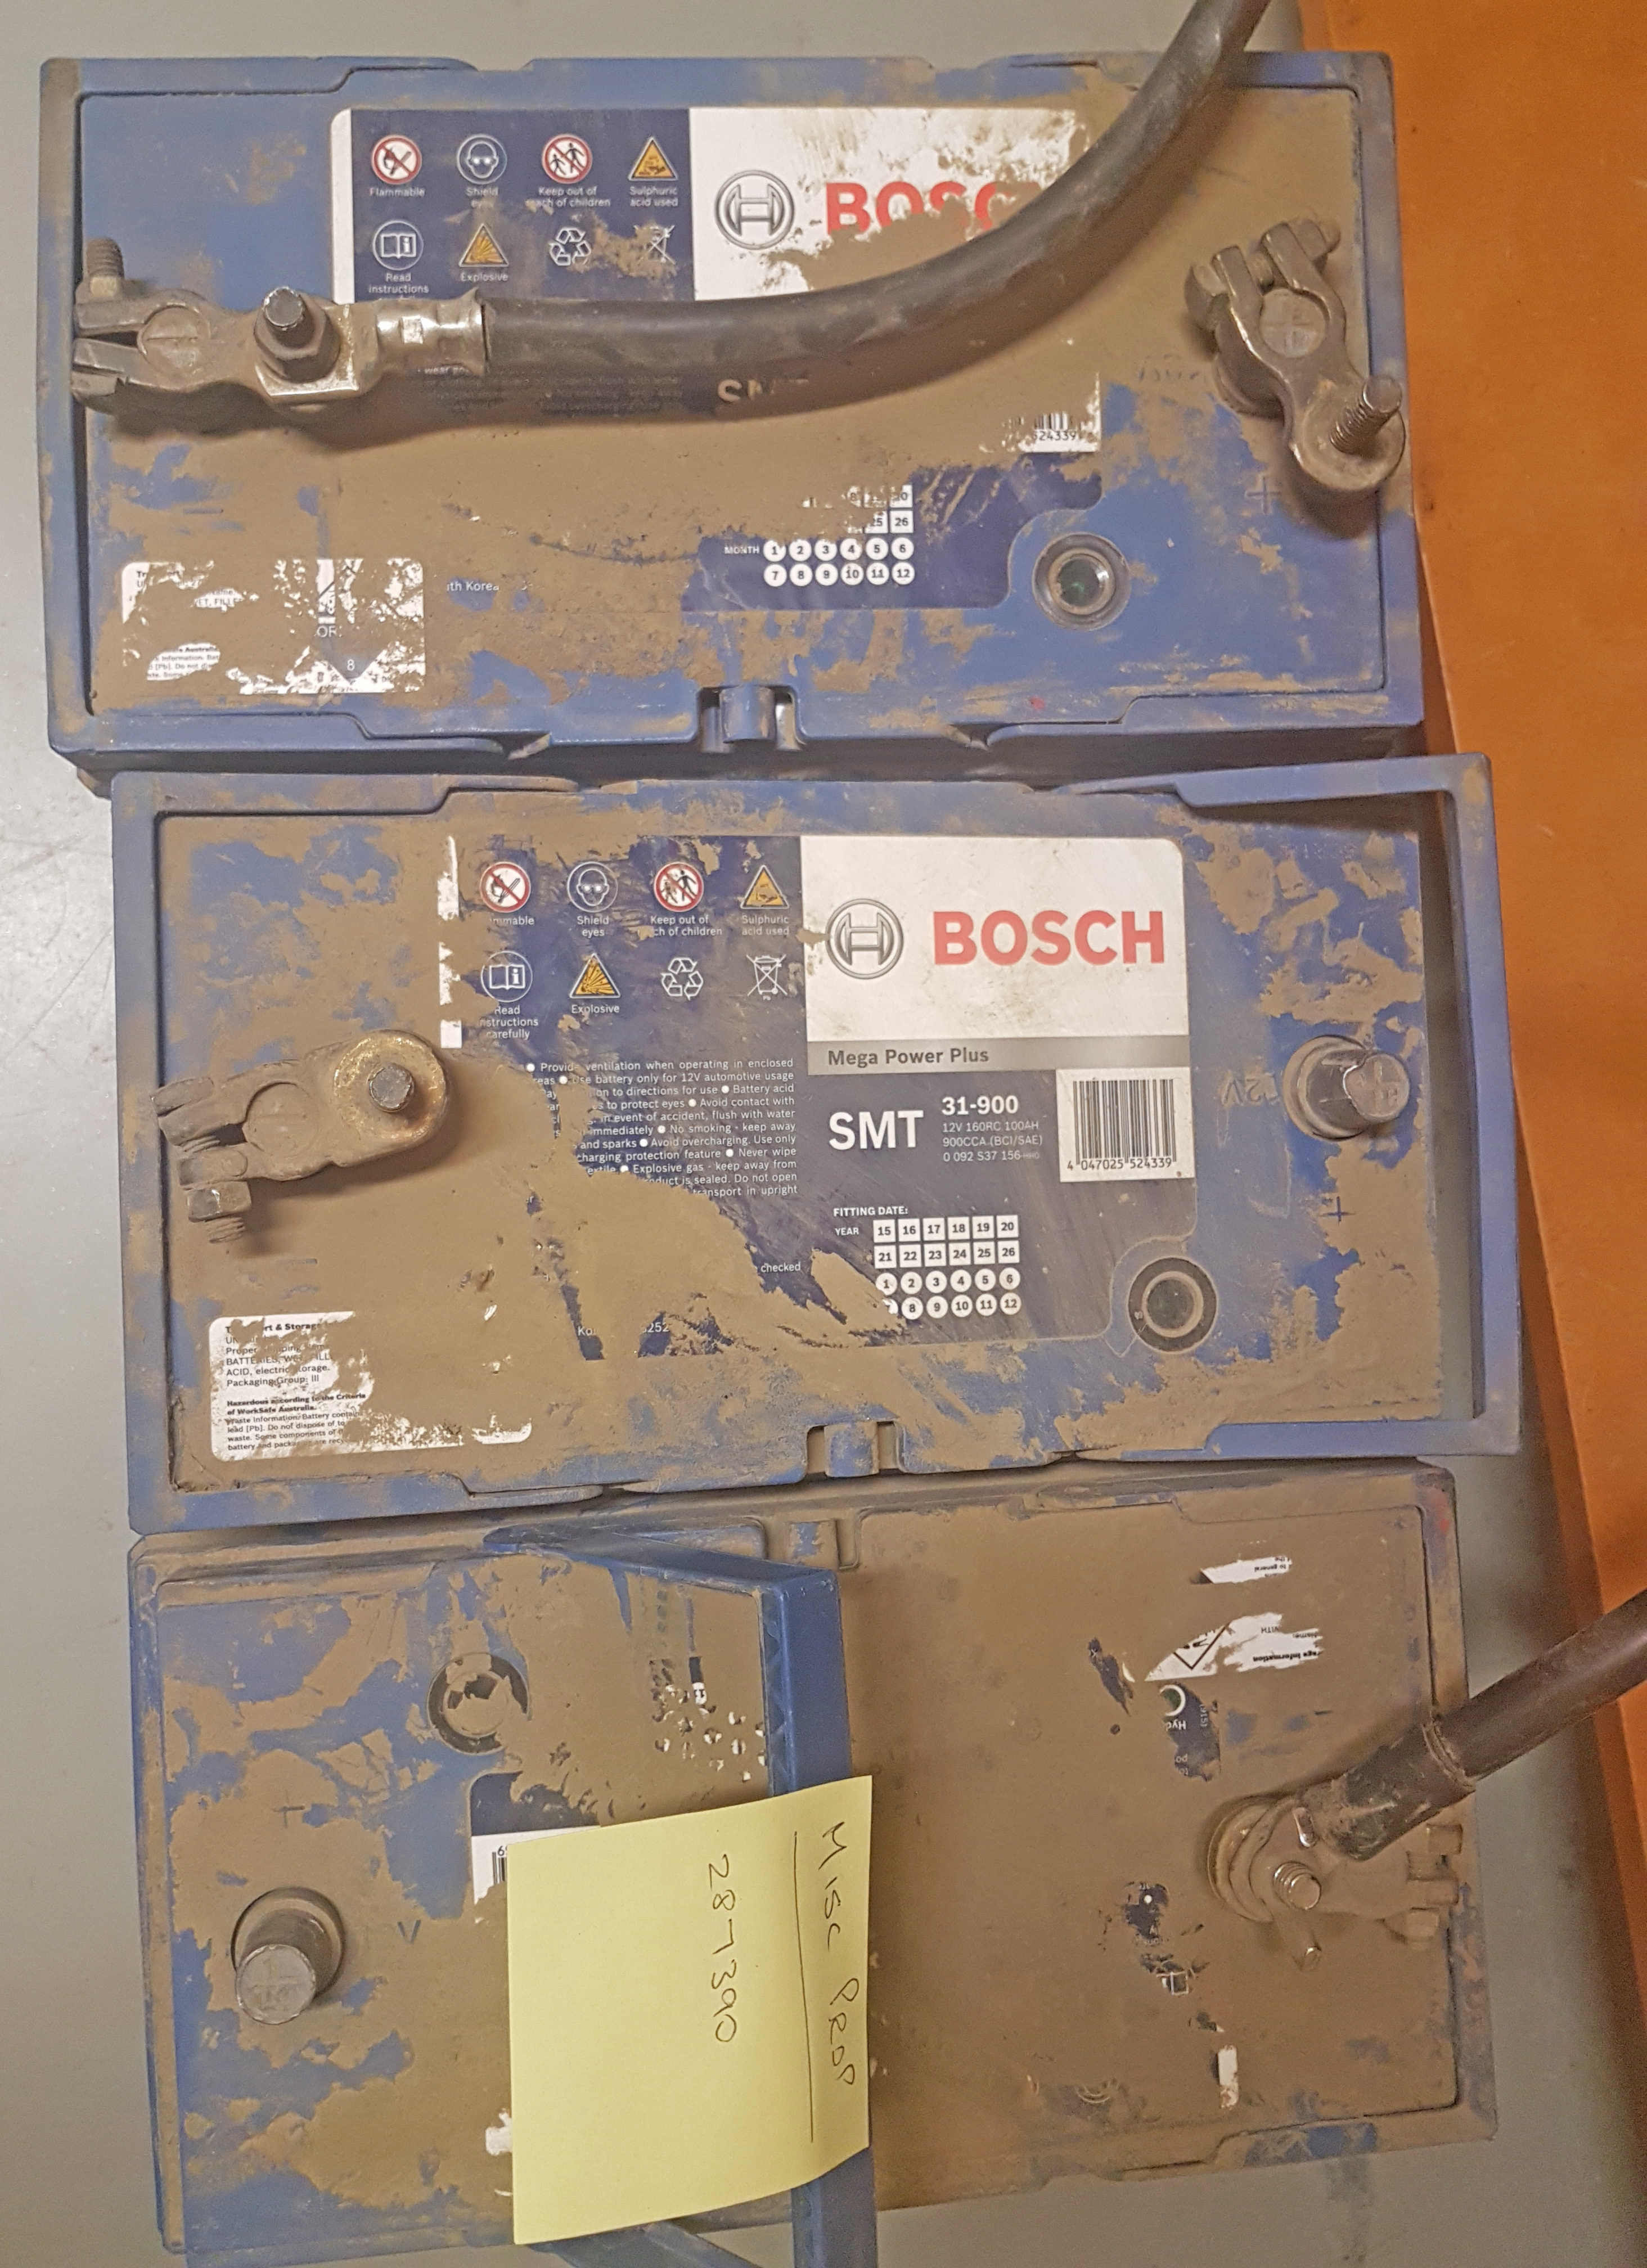 Stolen Bosch SMT 31-900 batteries - owner sought